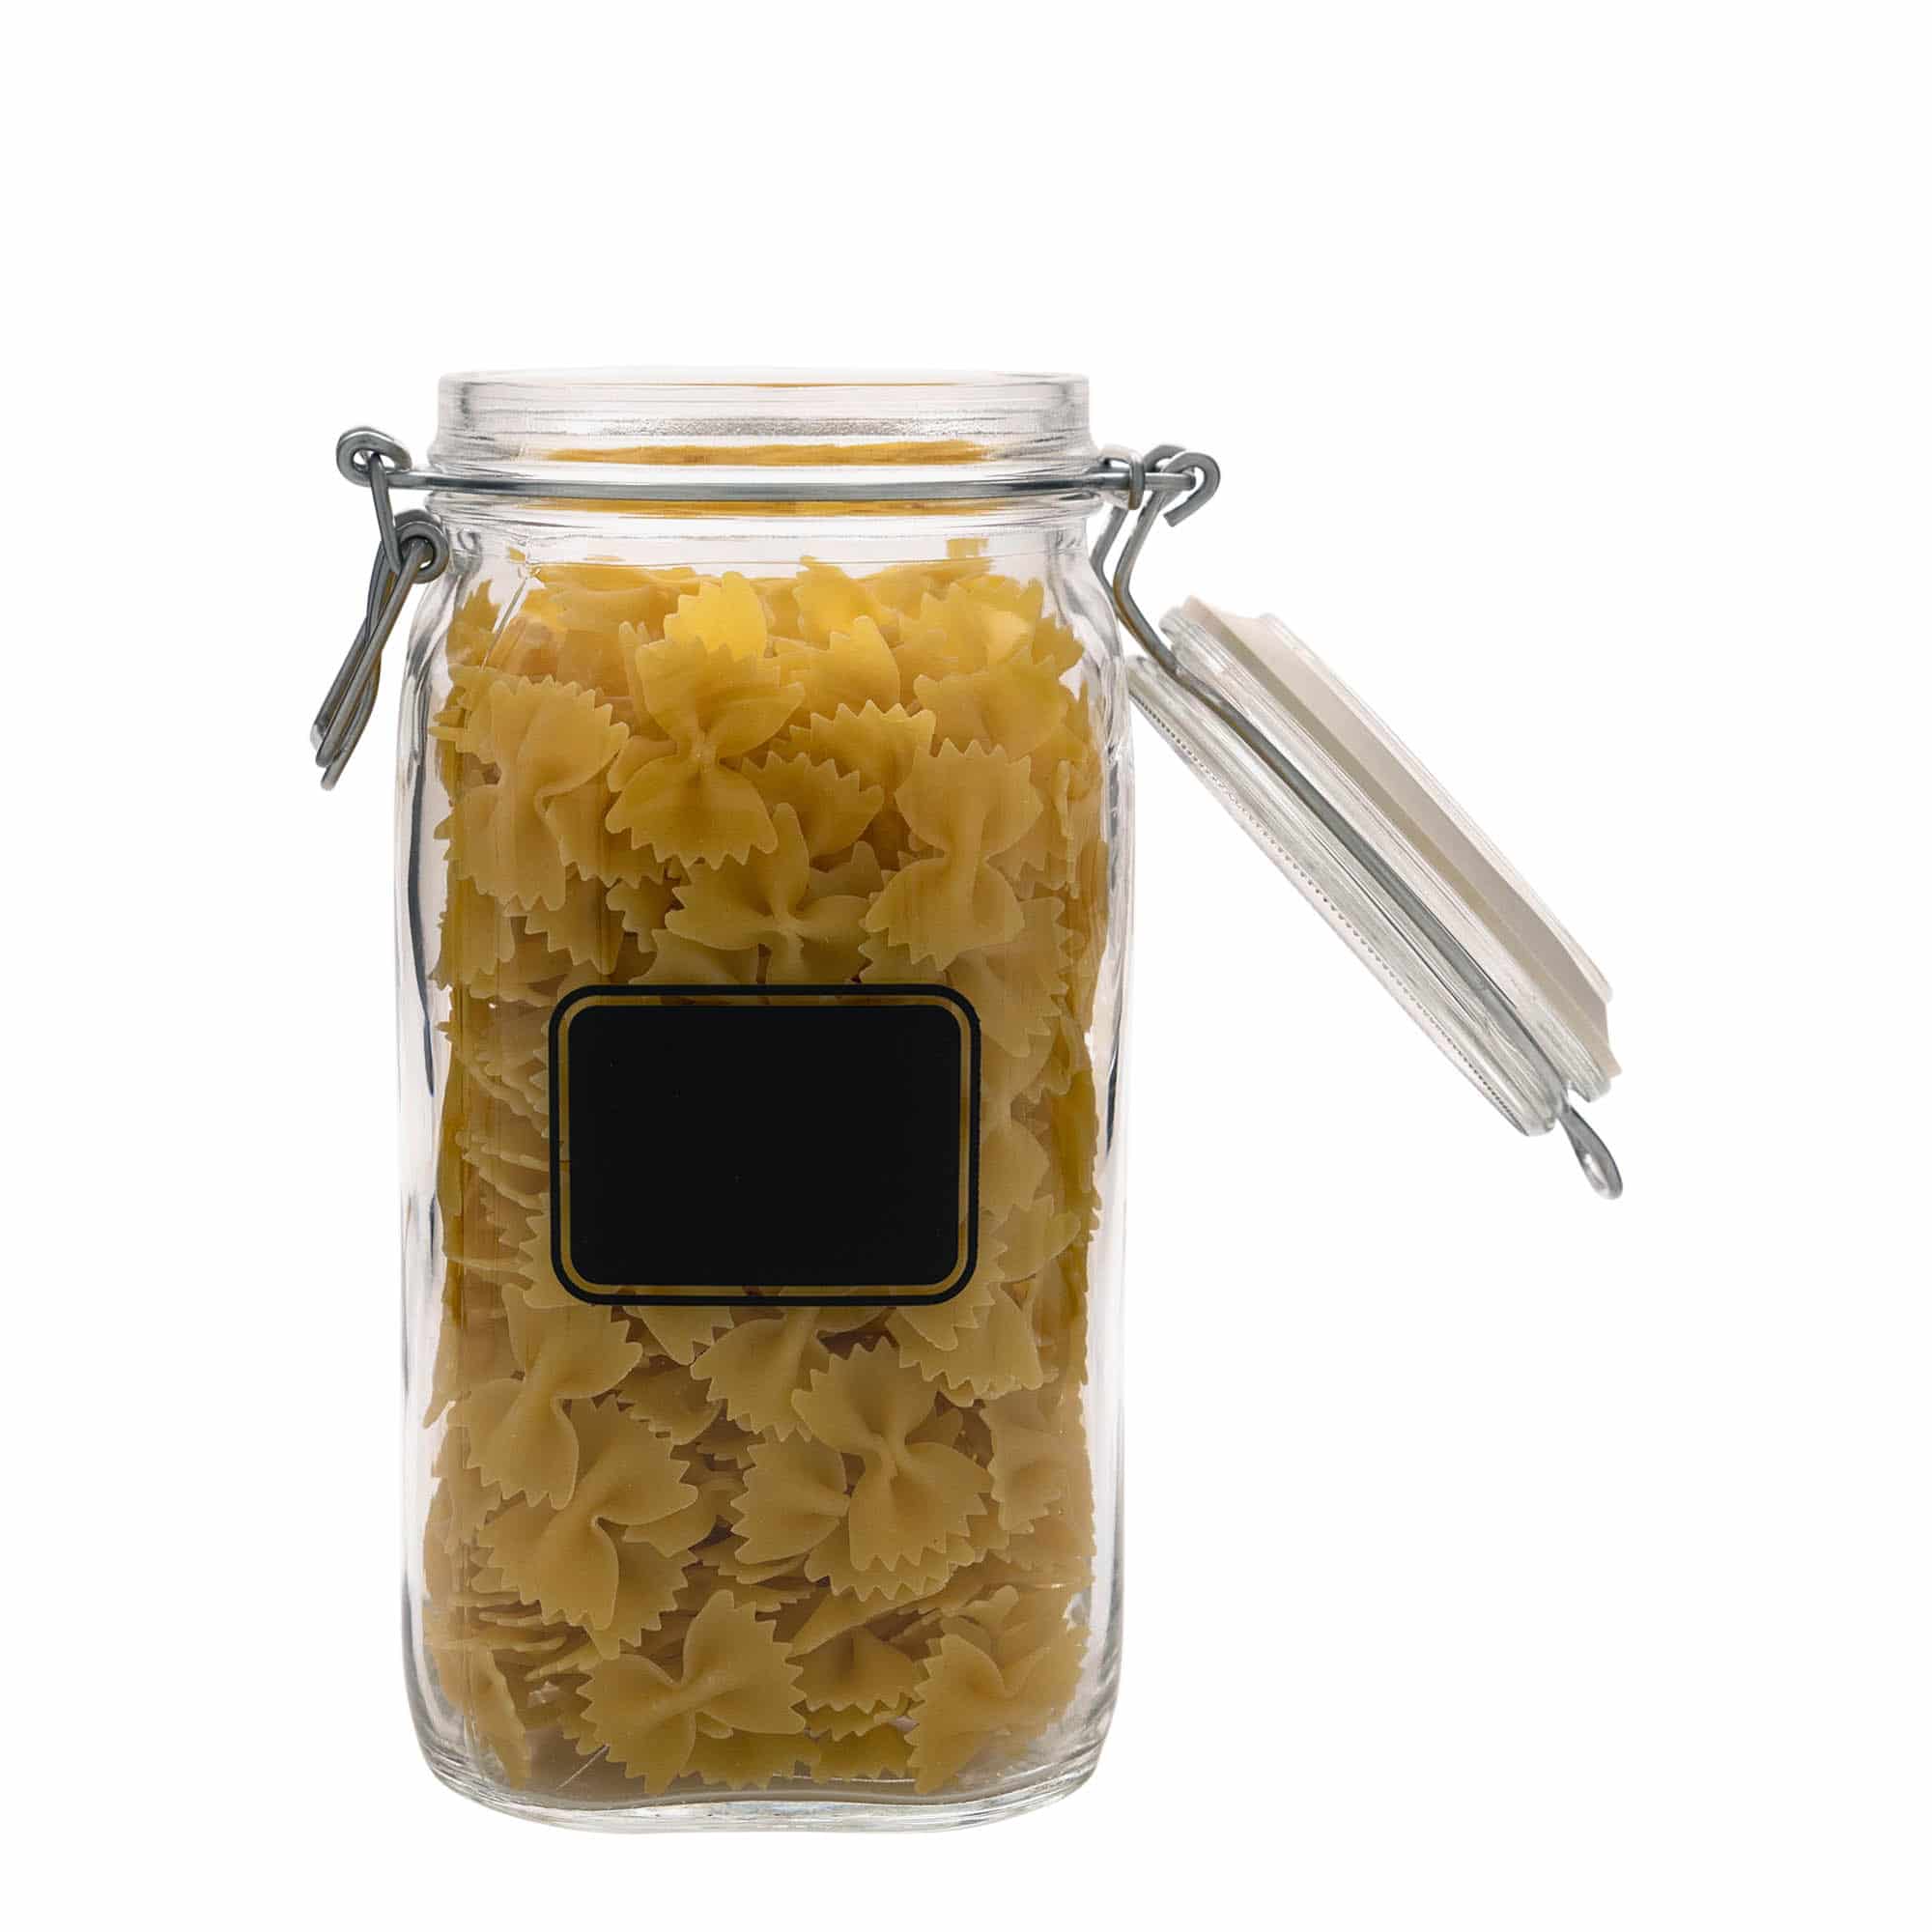 1,500 ml clip top jar 'Fido', print: blank label, square, closure: clip top